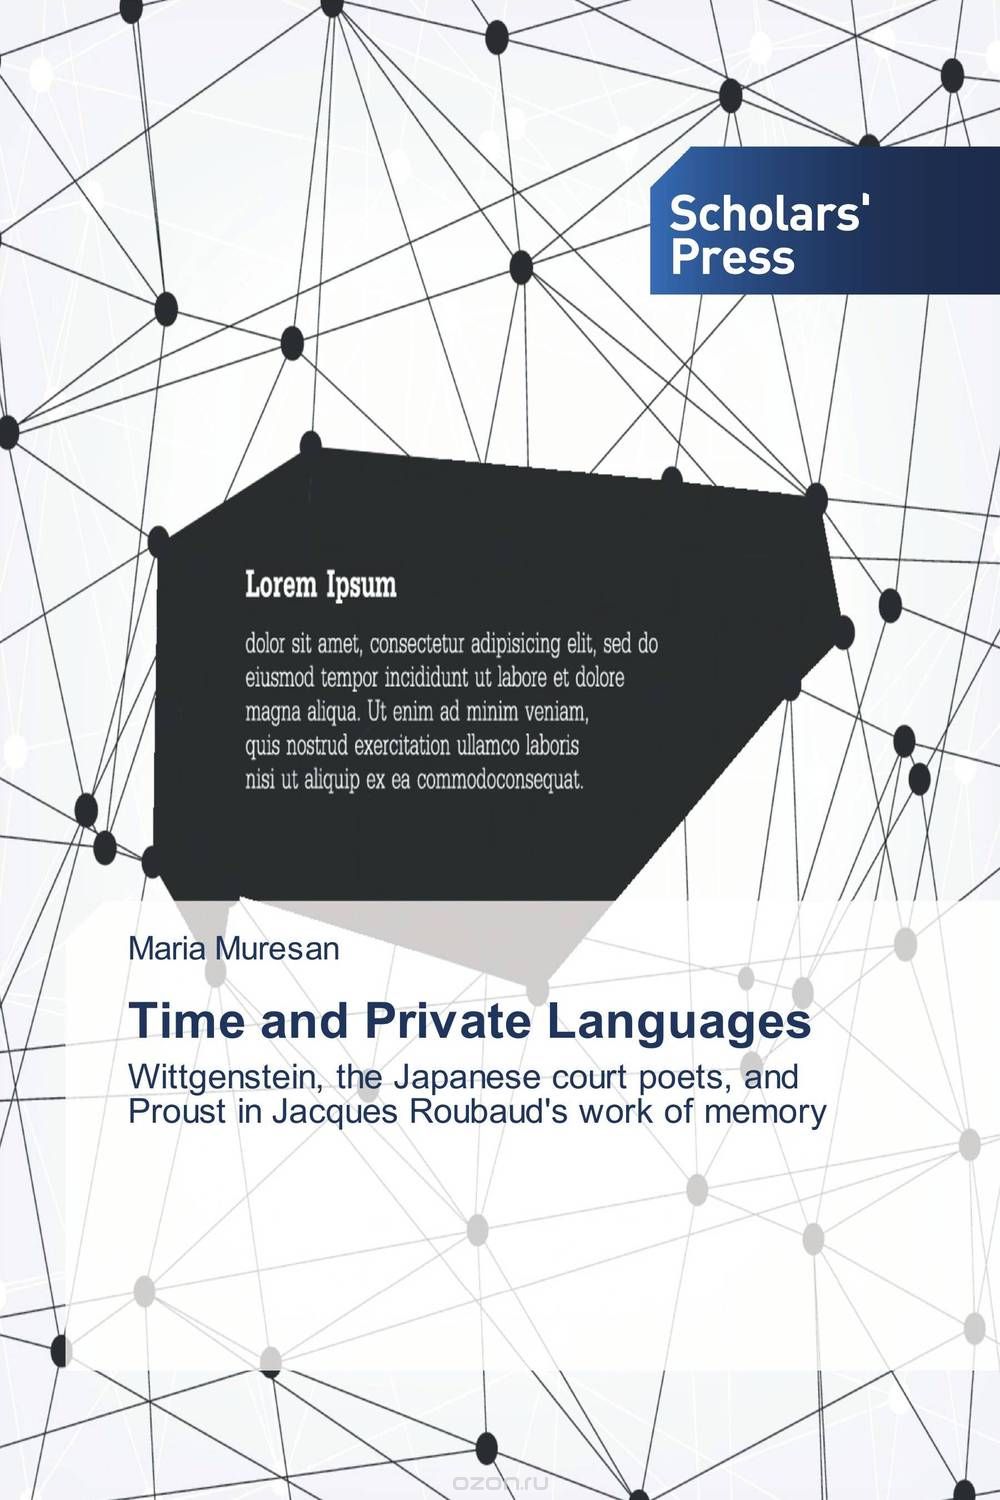 Скачать книгу "Time and Private Languages"